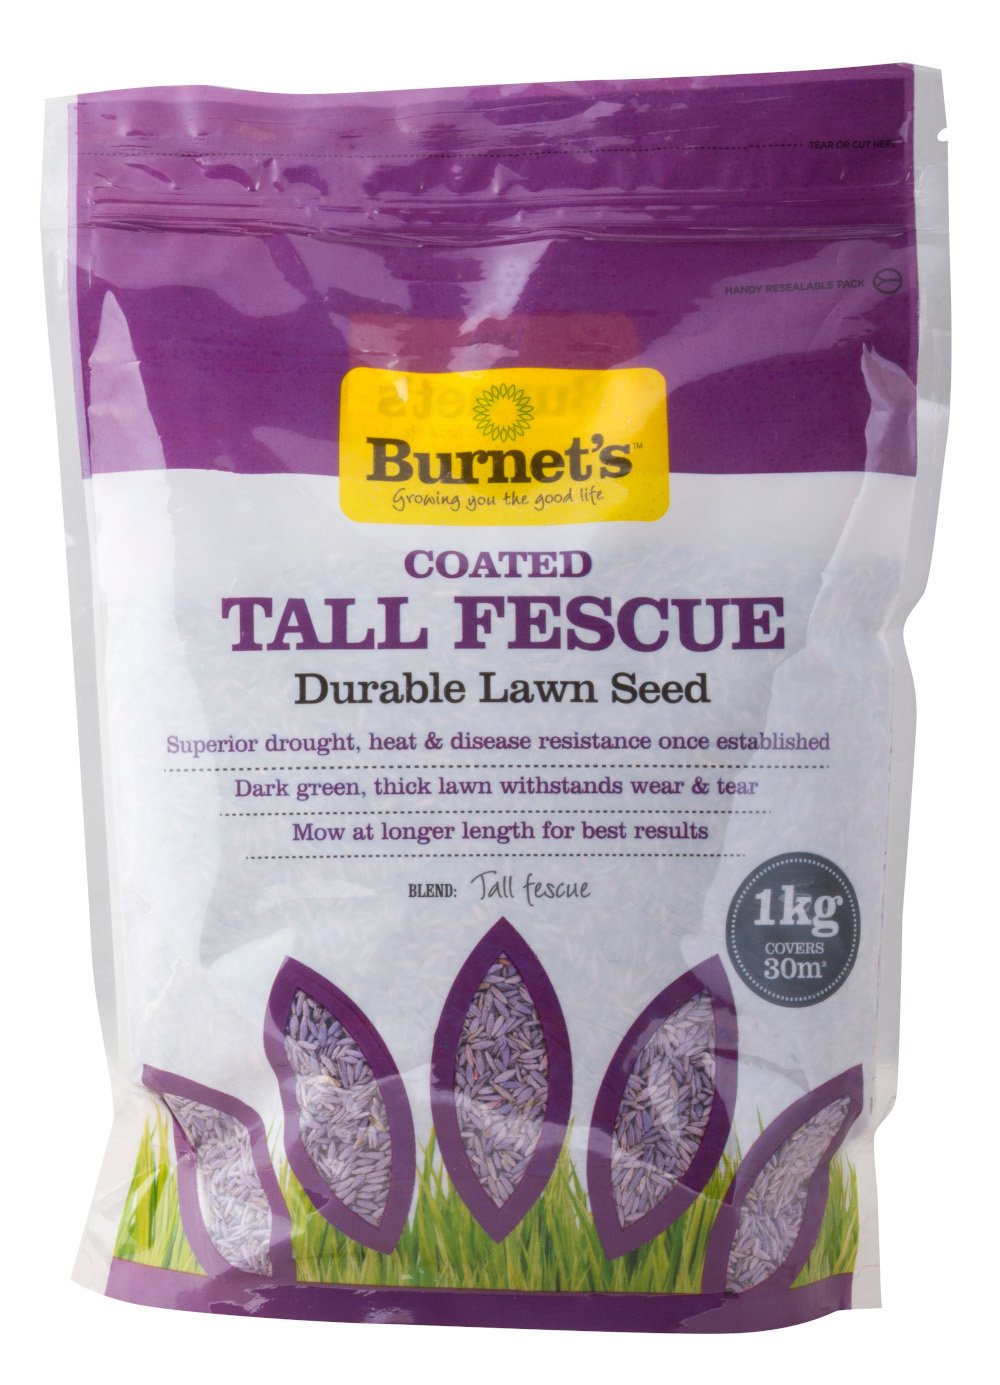 Burnets Tall Fescue Durable Lawn Seed 1kg